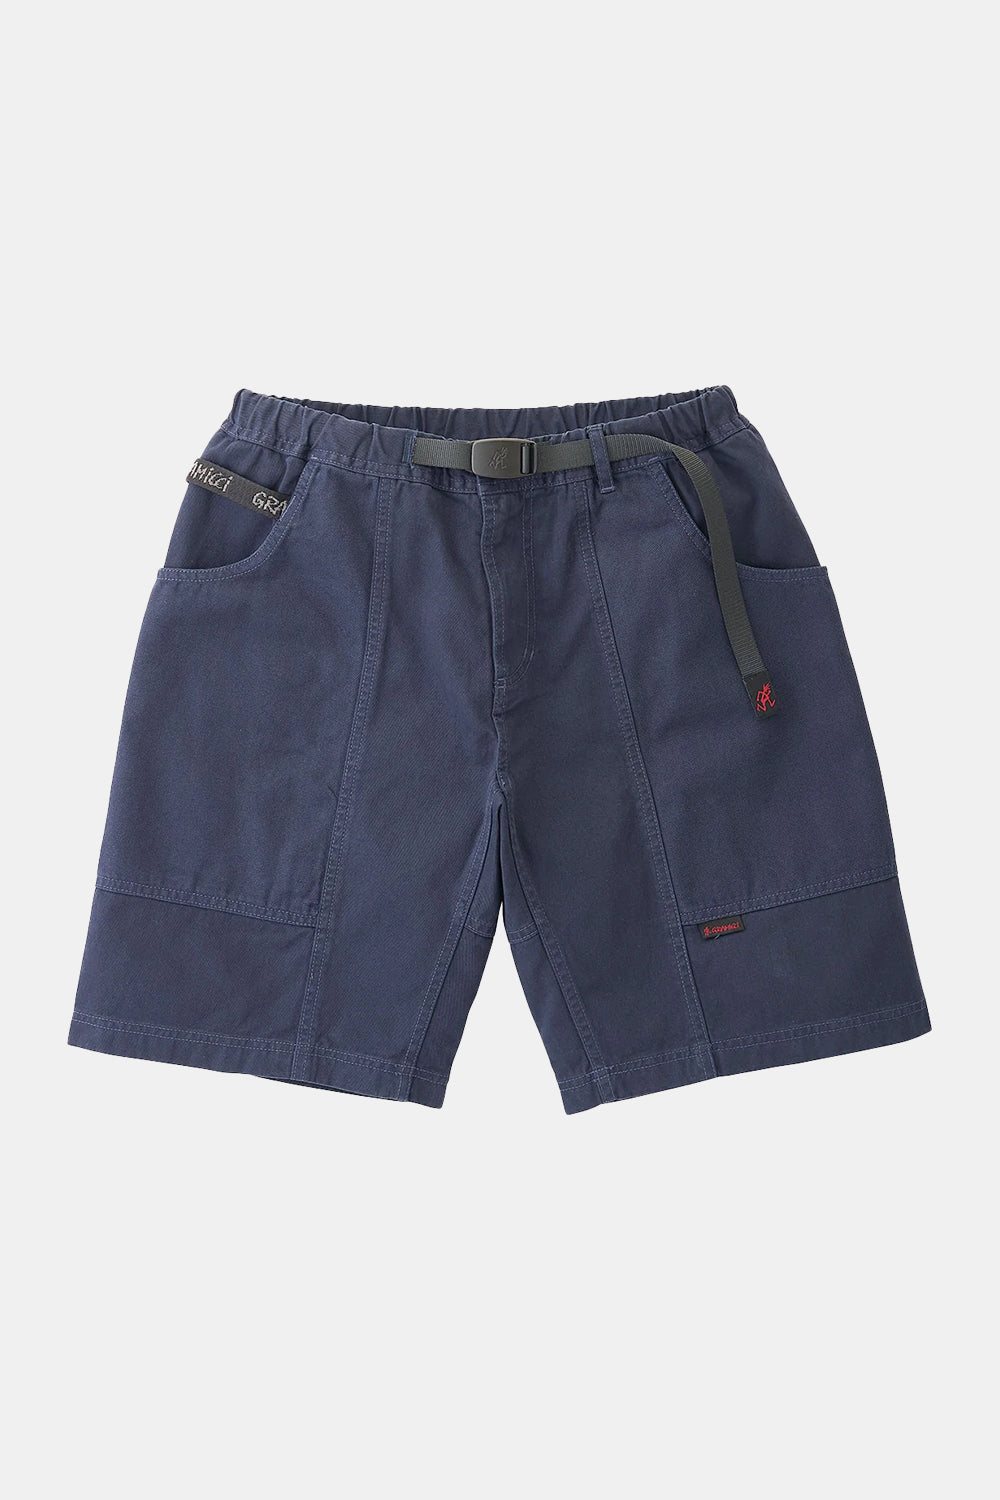 Gramicci Gadget Shorts (Double Navy)